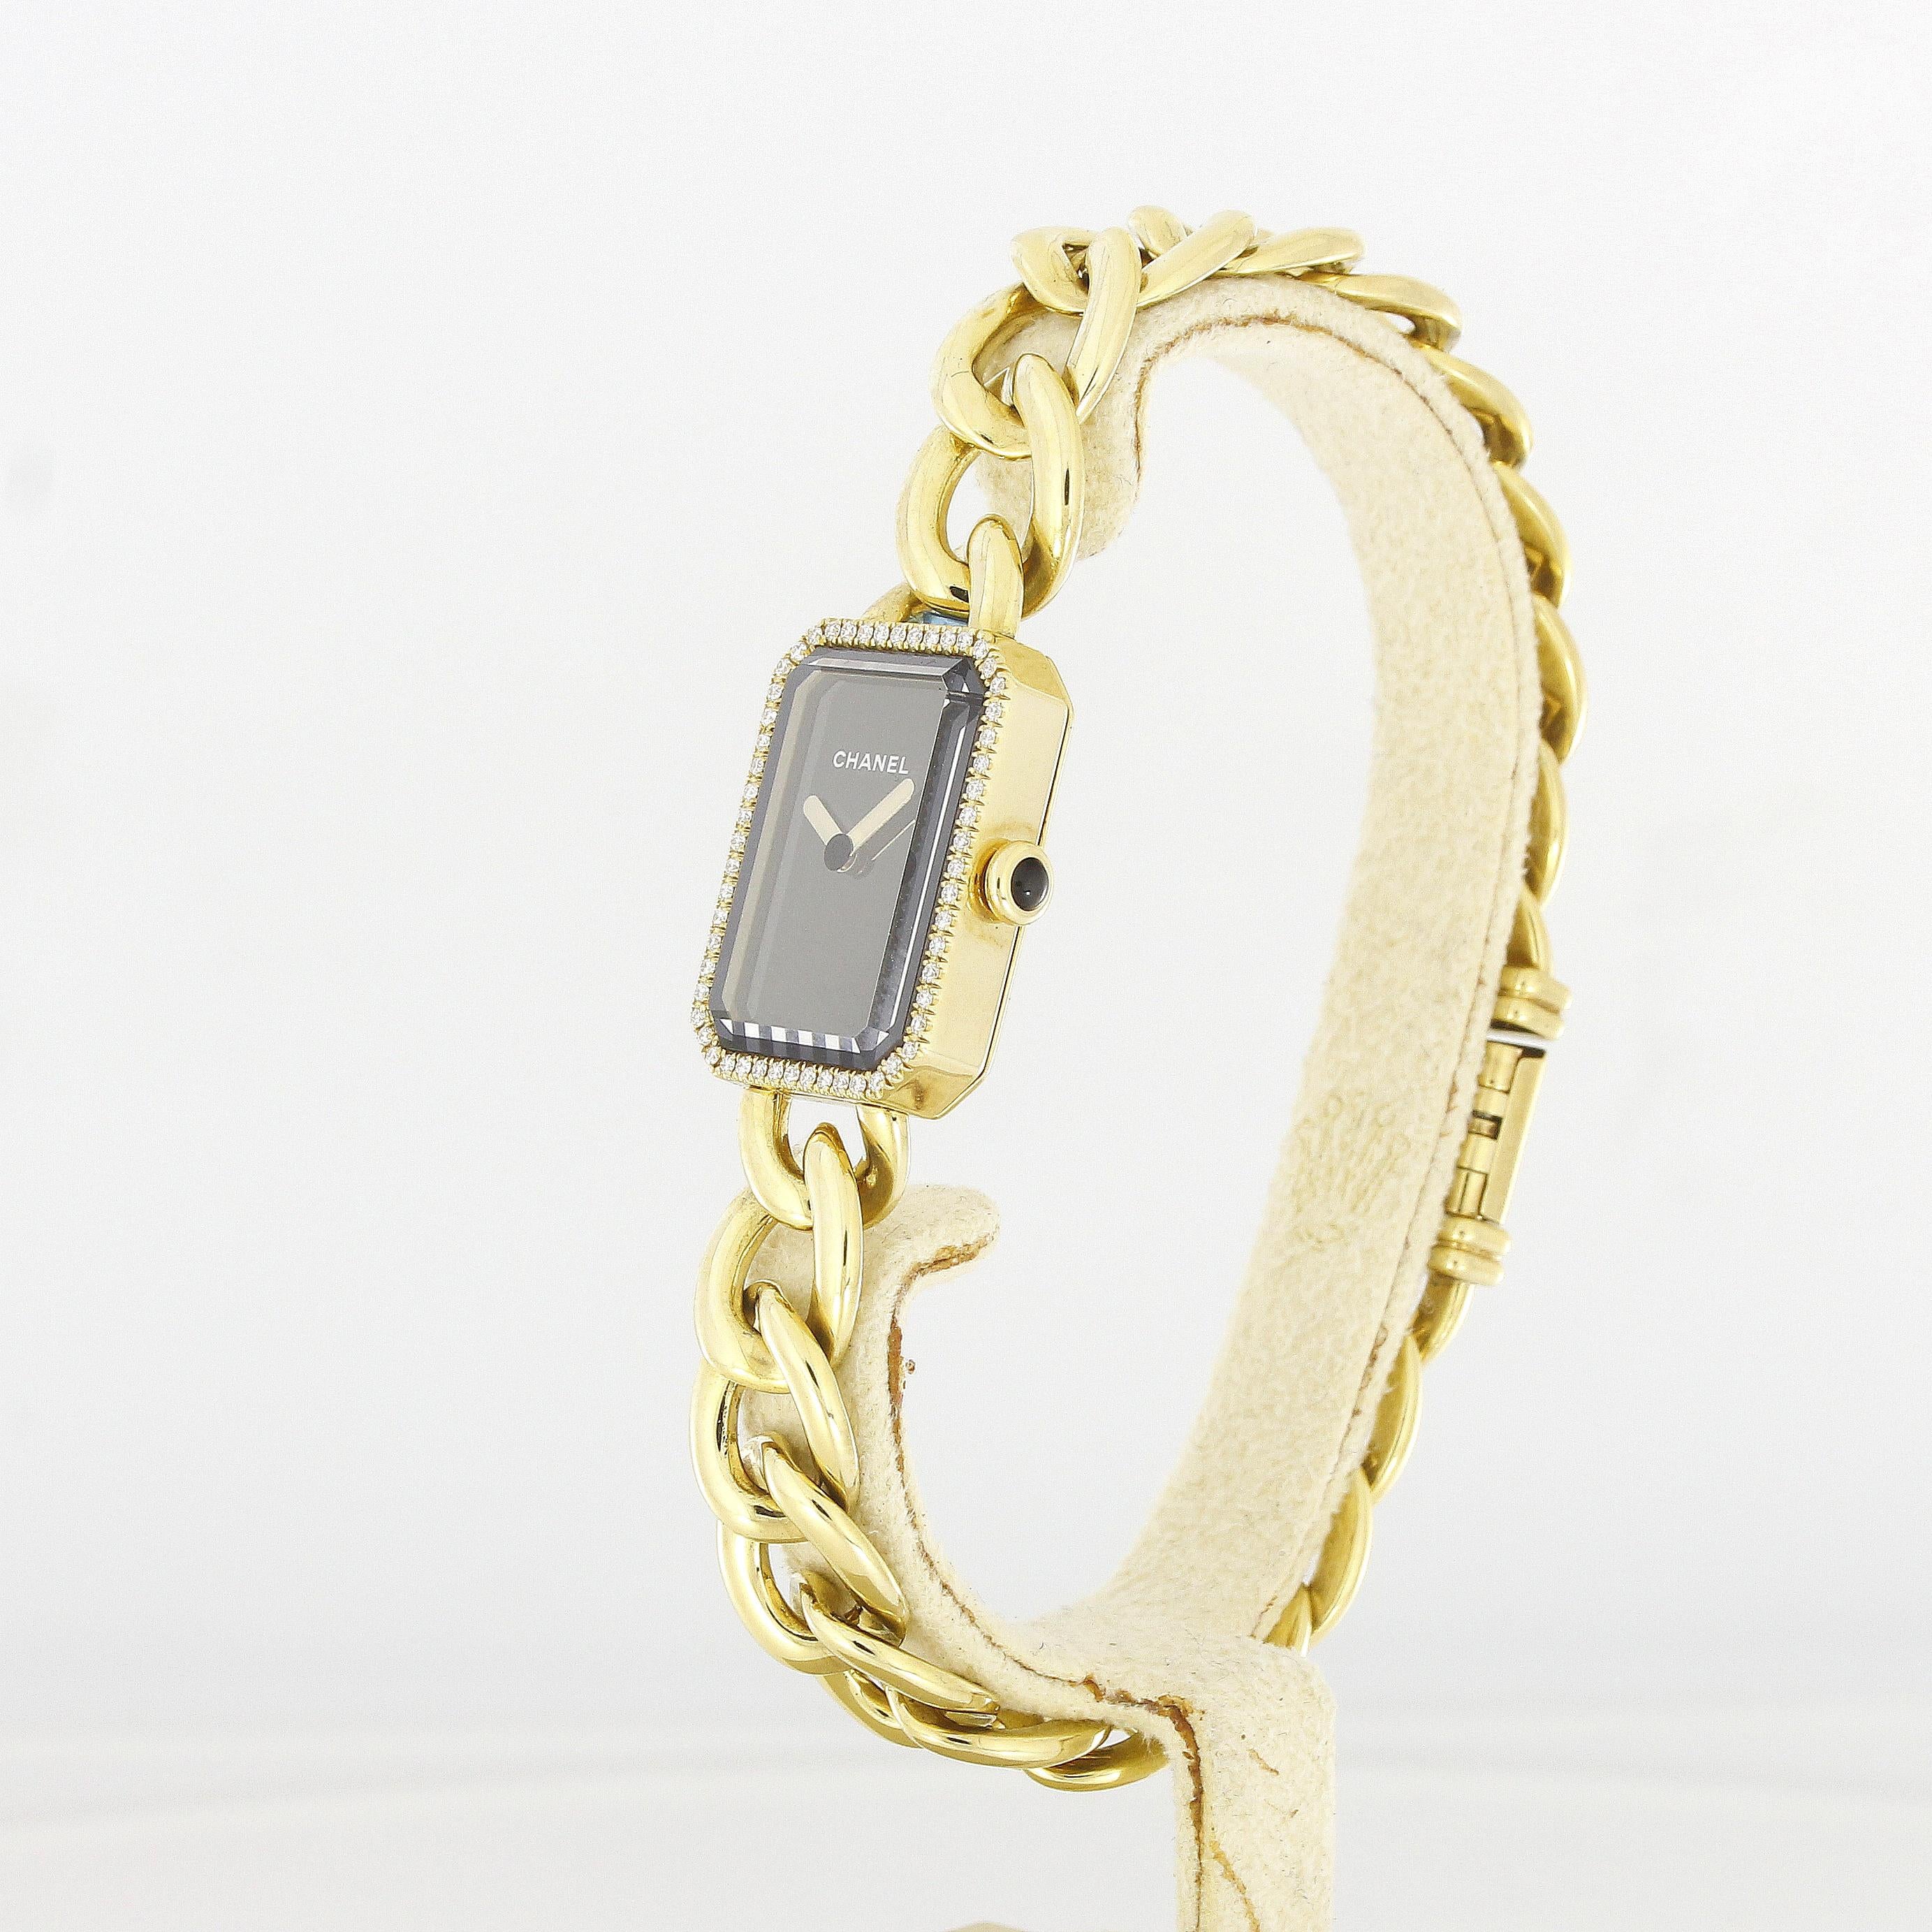 Chanel Première Ladies Wristwatch Yellow Gold Diamonds

Reference: H3258
Material: 18k Yellow Gold
Movement: Quartz
Measurements: 22 x 16 x 6,2 mm
Dial: Black
Bracelet: 18k Yellow Gold
Accessories: Box & Original certificate from 2022